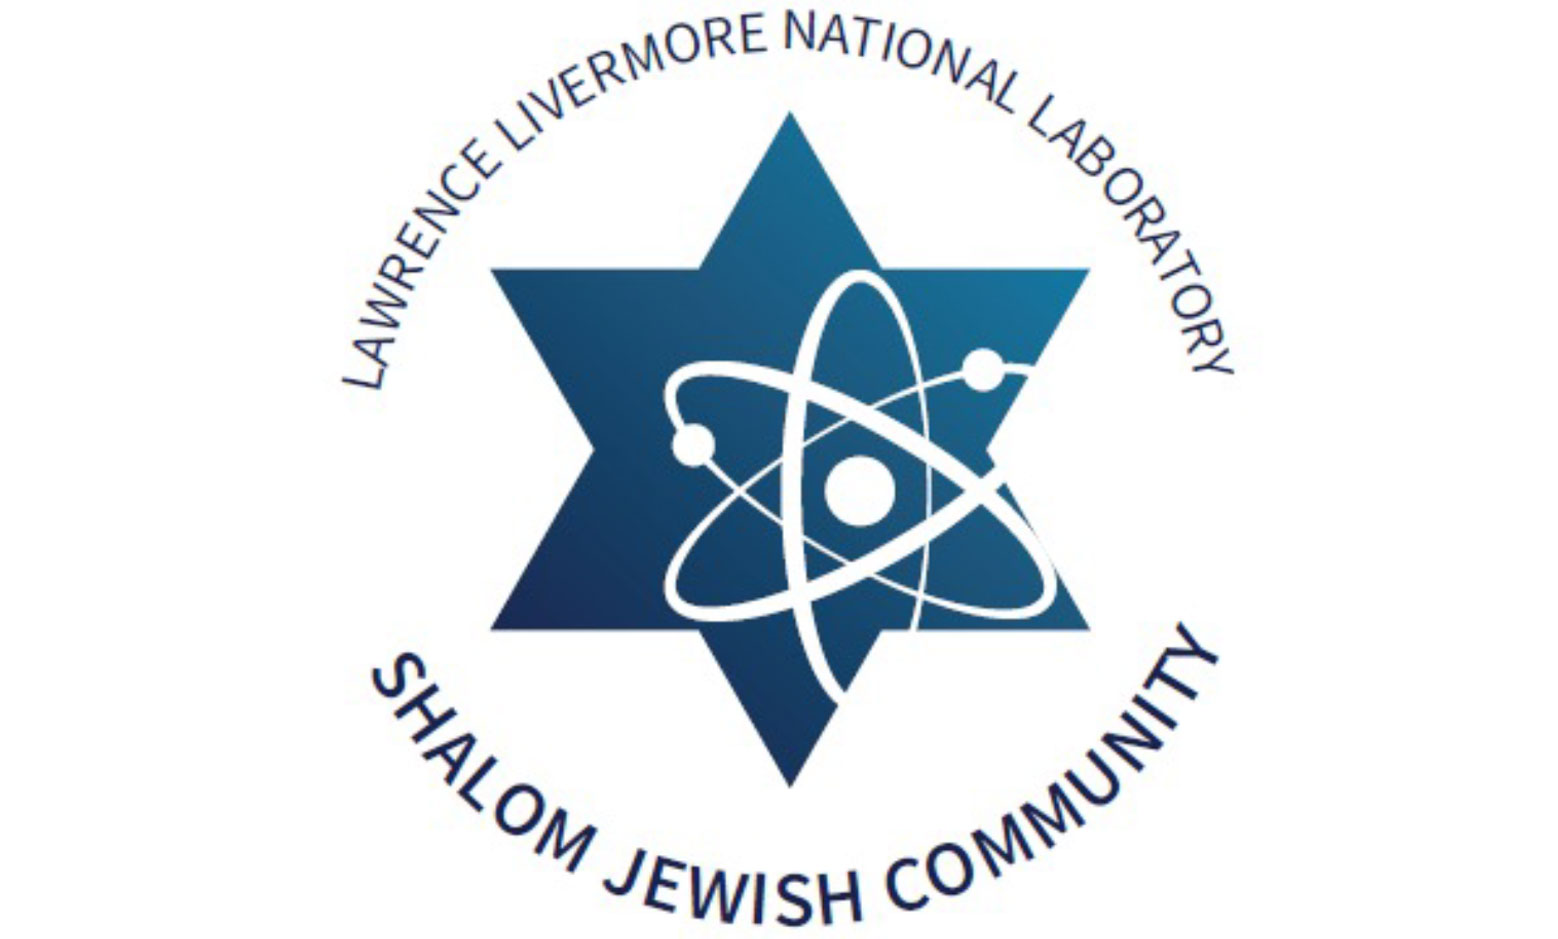 Shalom Jewish Community logo